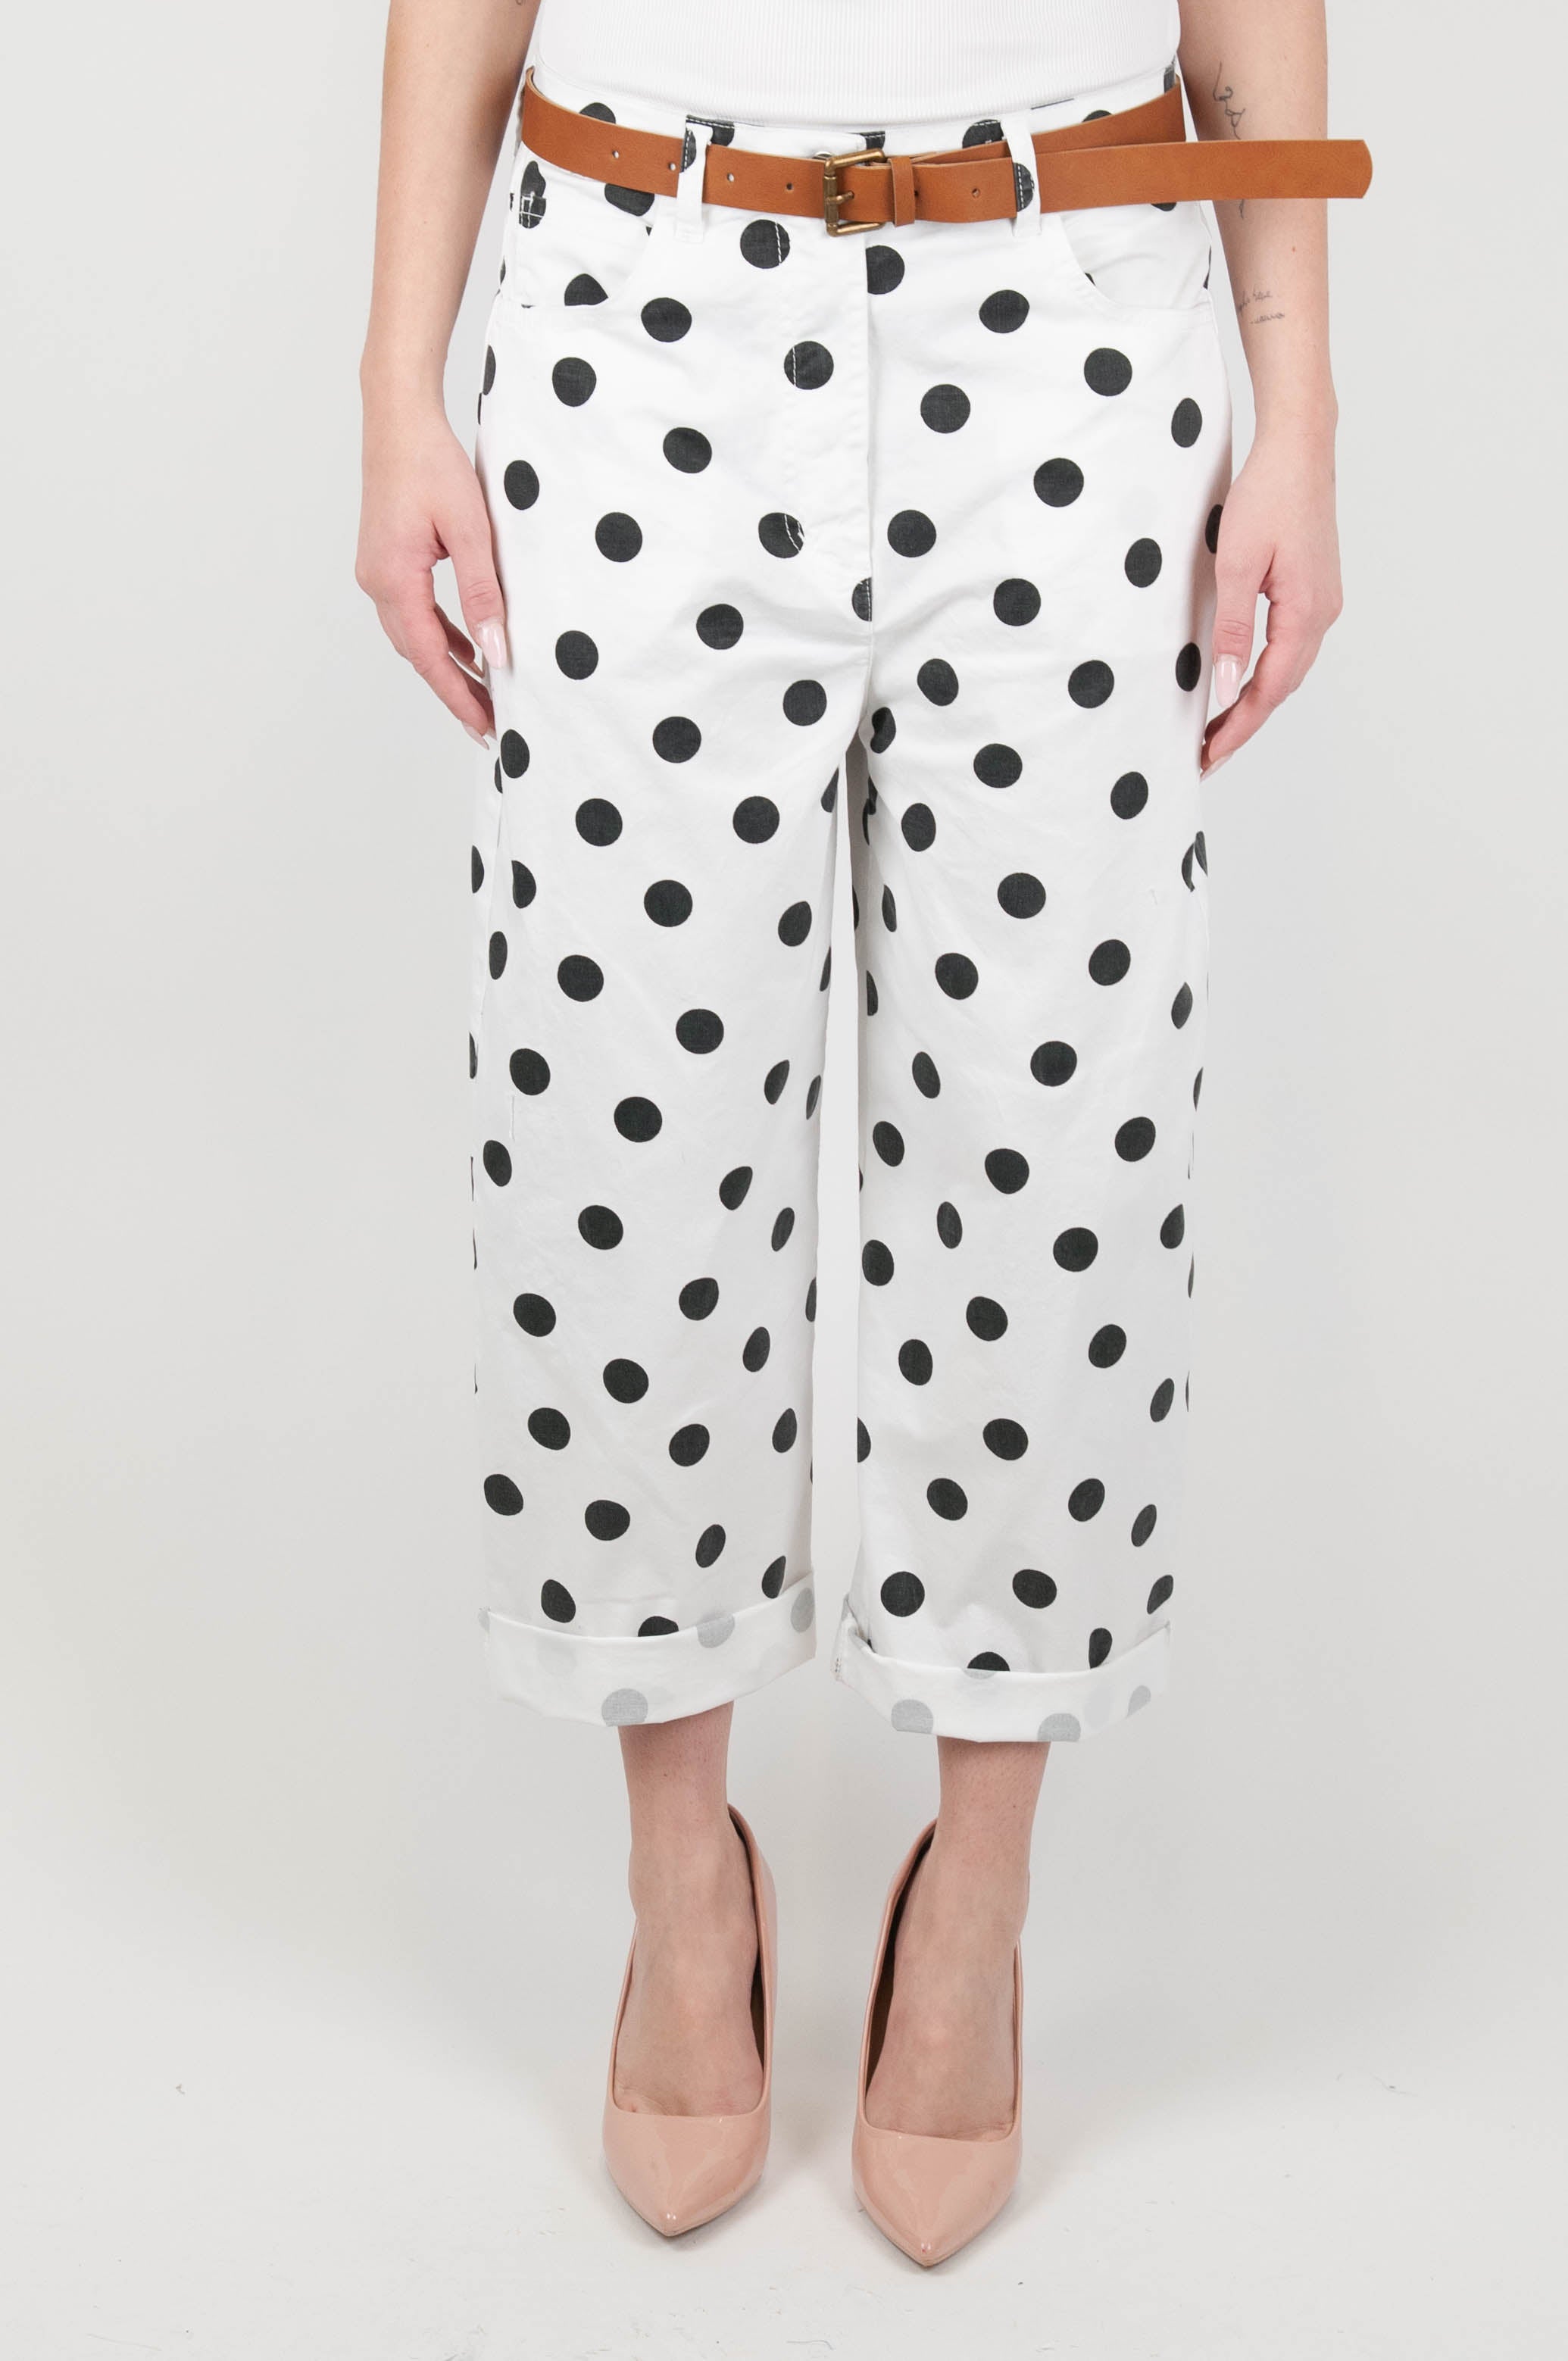 Tension in - Regular polka dot pattern trousers